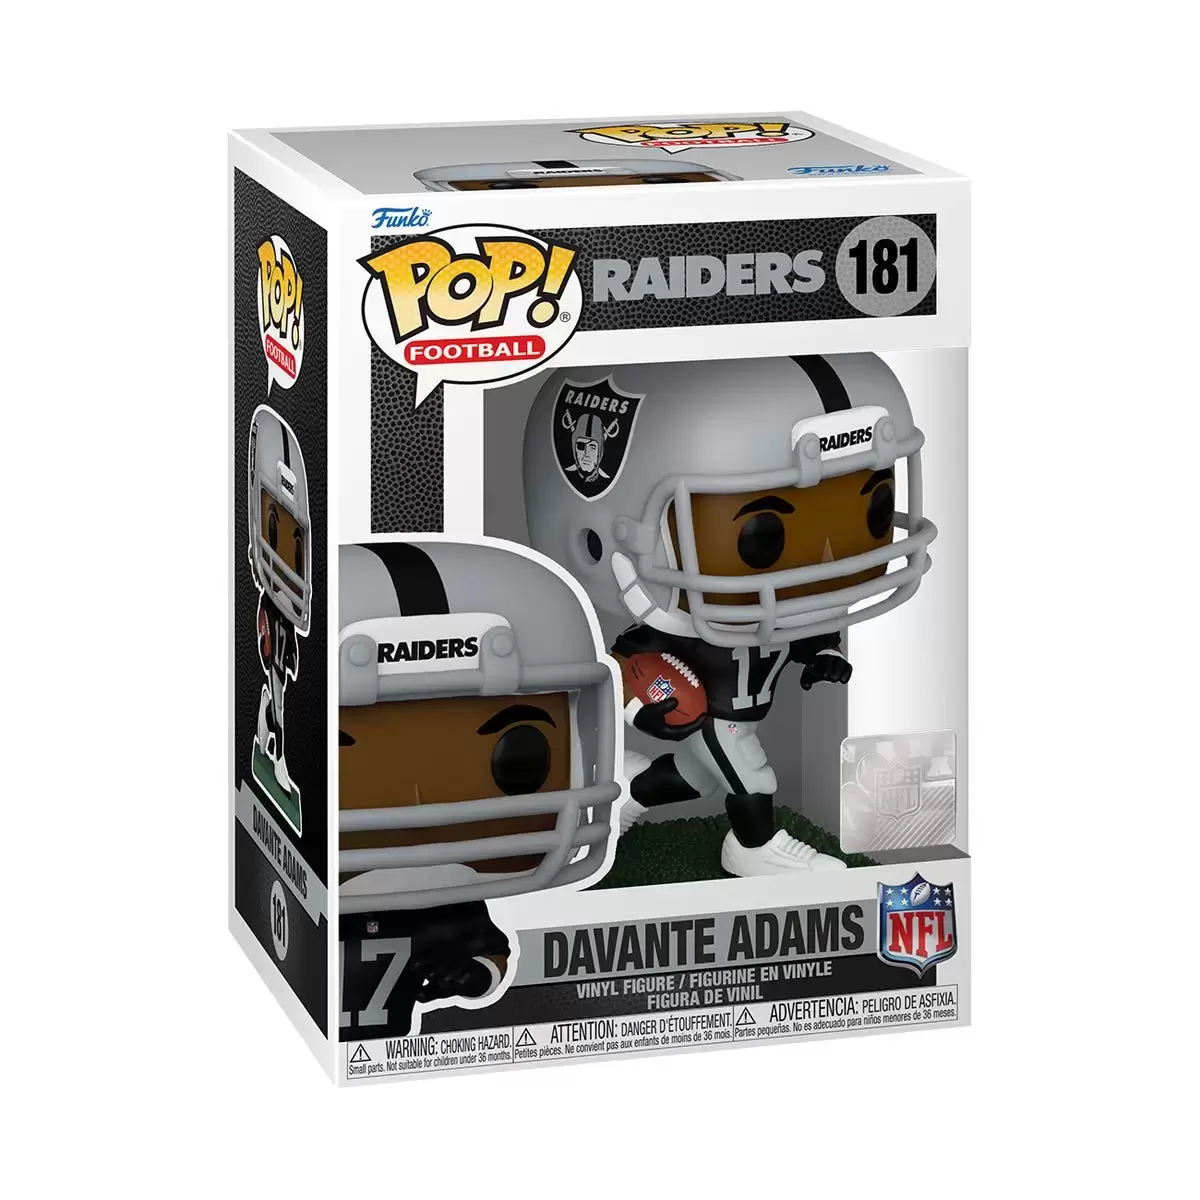 NFL:Raiders - Davante Adams - POP! Football (NFL) action figure 181